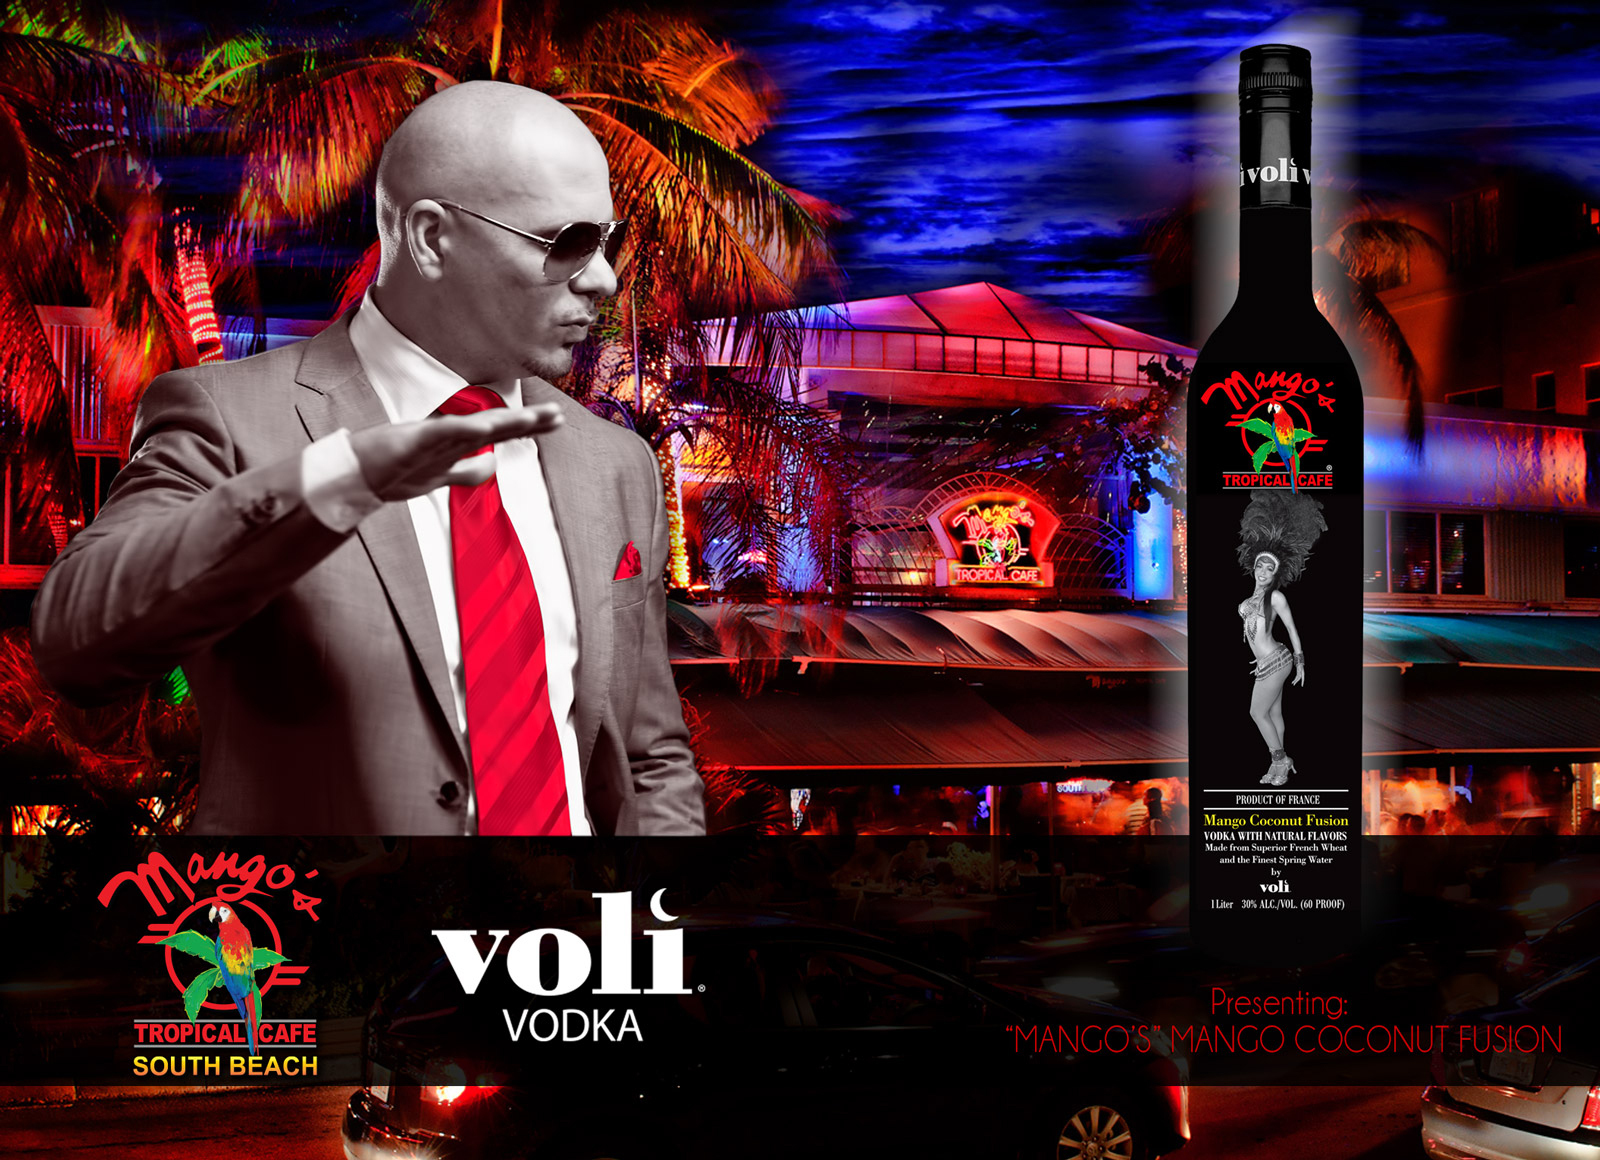 Correcting And Replacing Pitbull Voli Vodka And Mango S Tropical